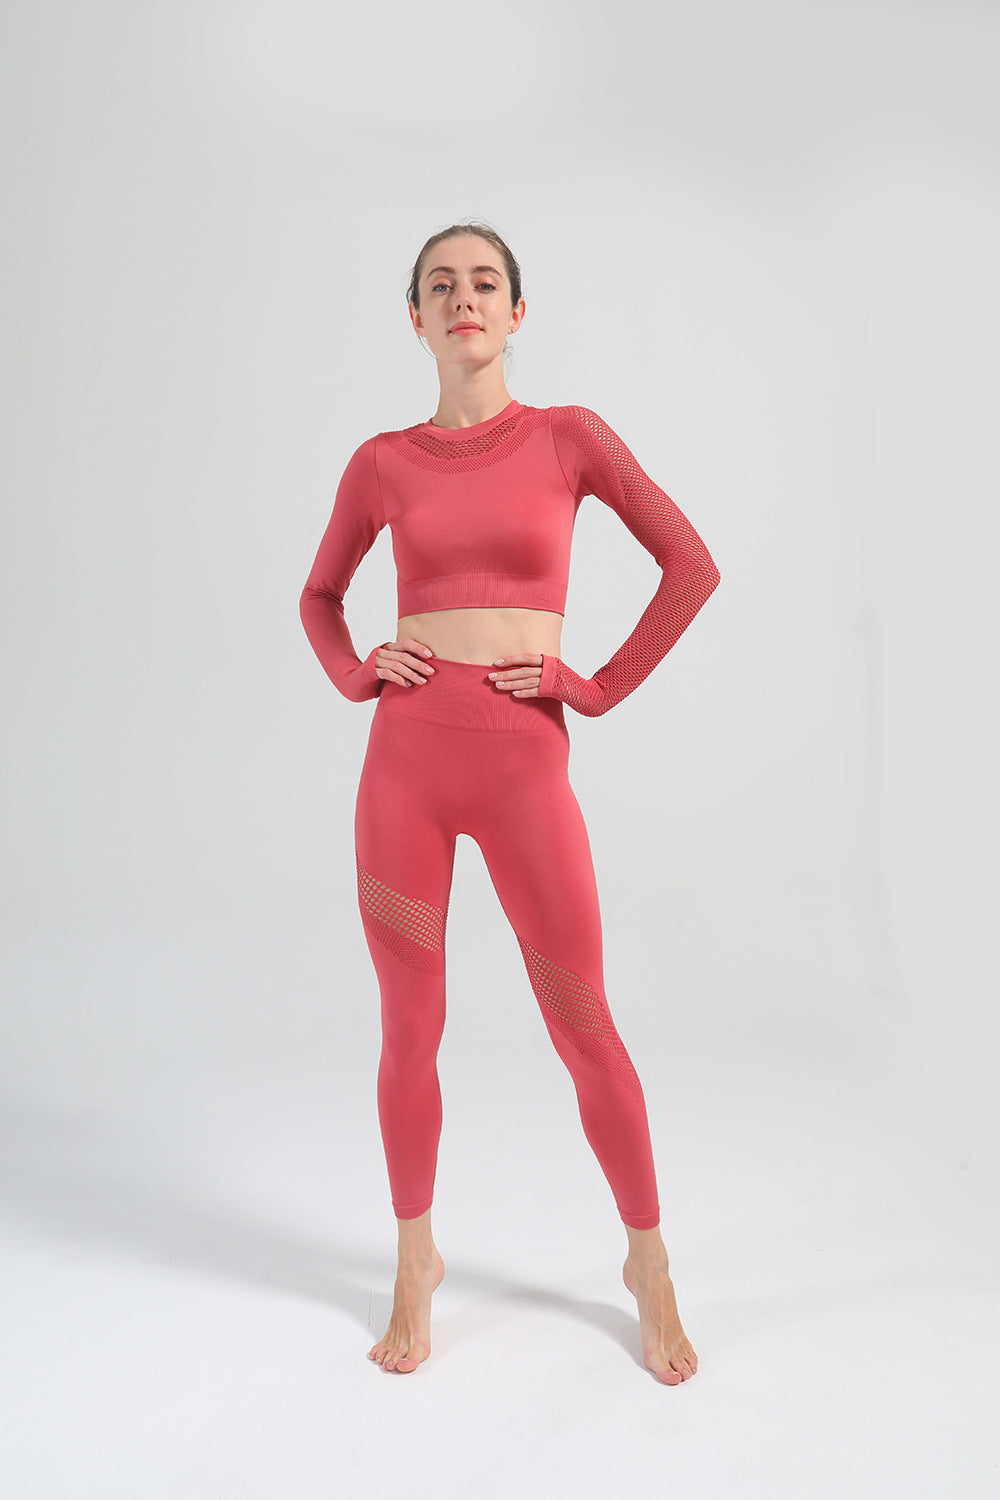 Hollow mesh stretch yoga suit high waist sexy peach-butt pantsuit